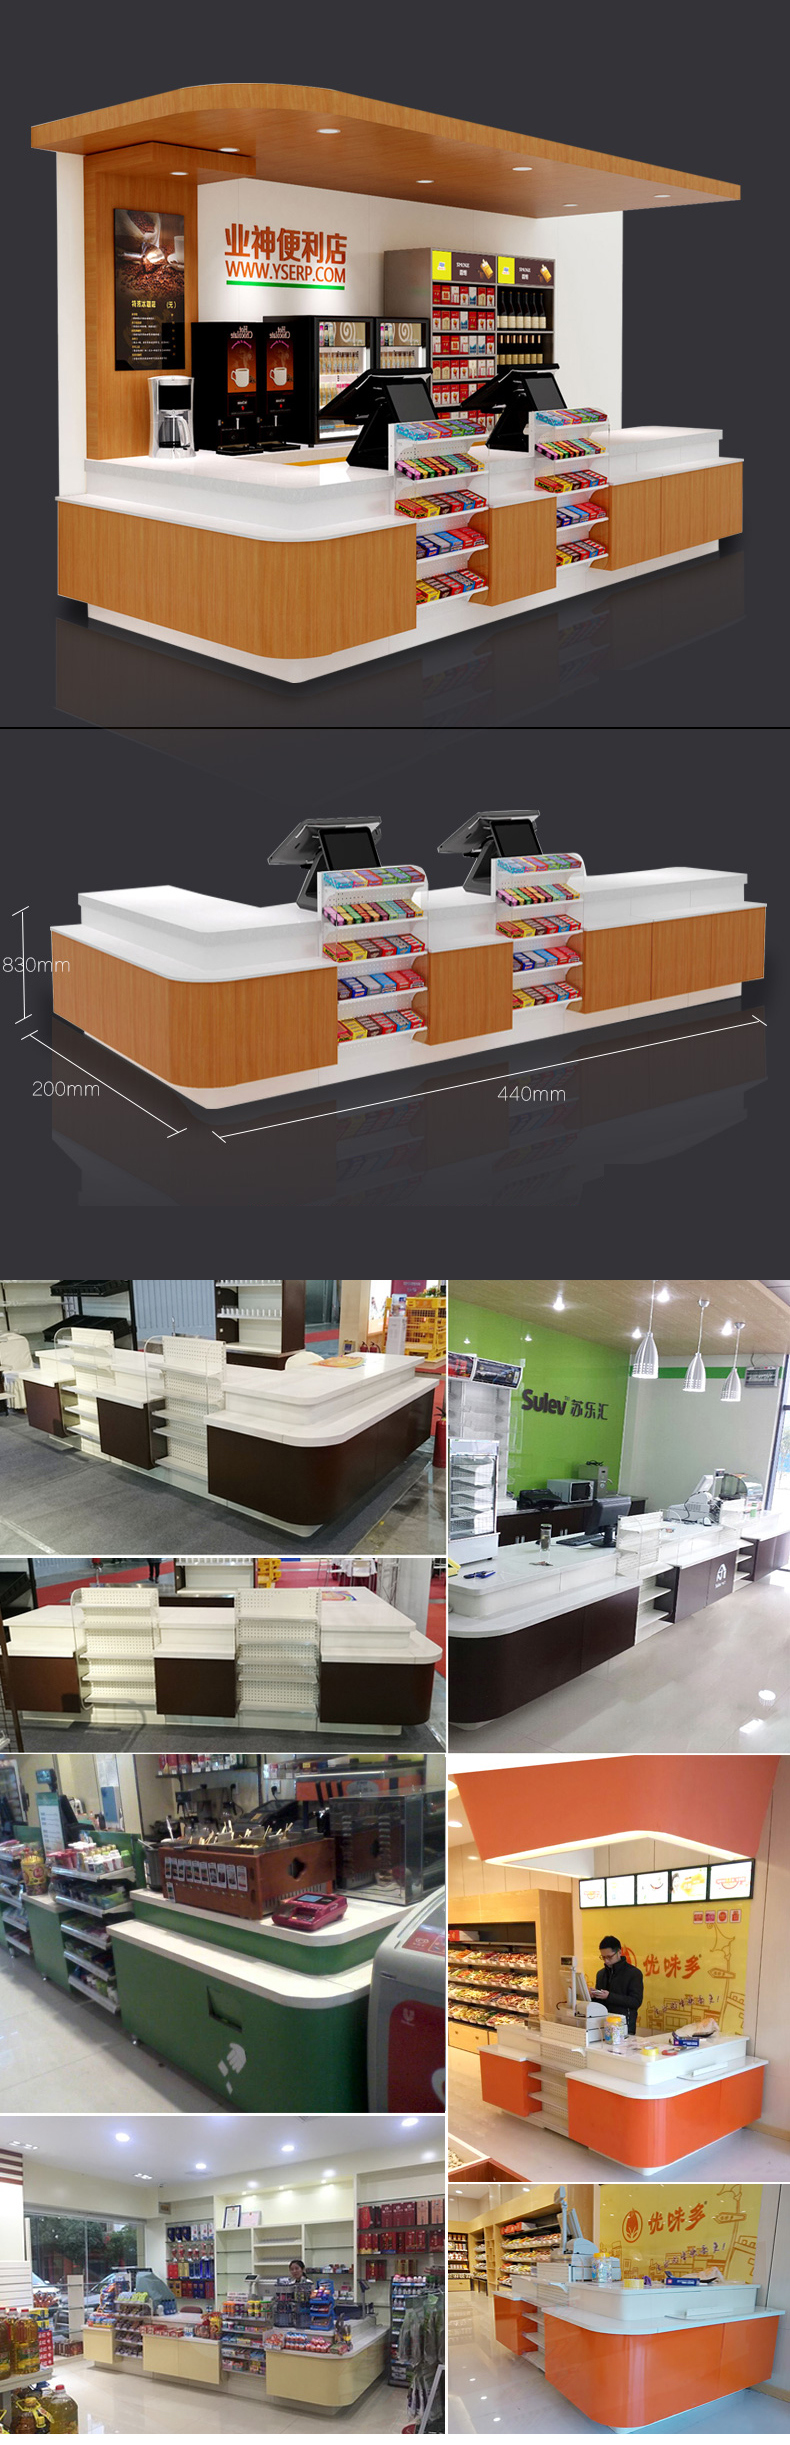 Checkout Counter with Small Shelf / Double Countertop Checkout Counter